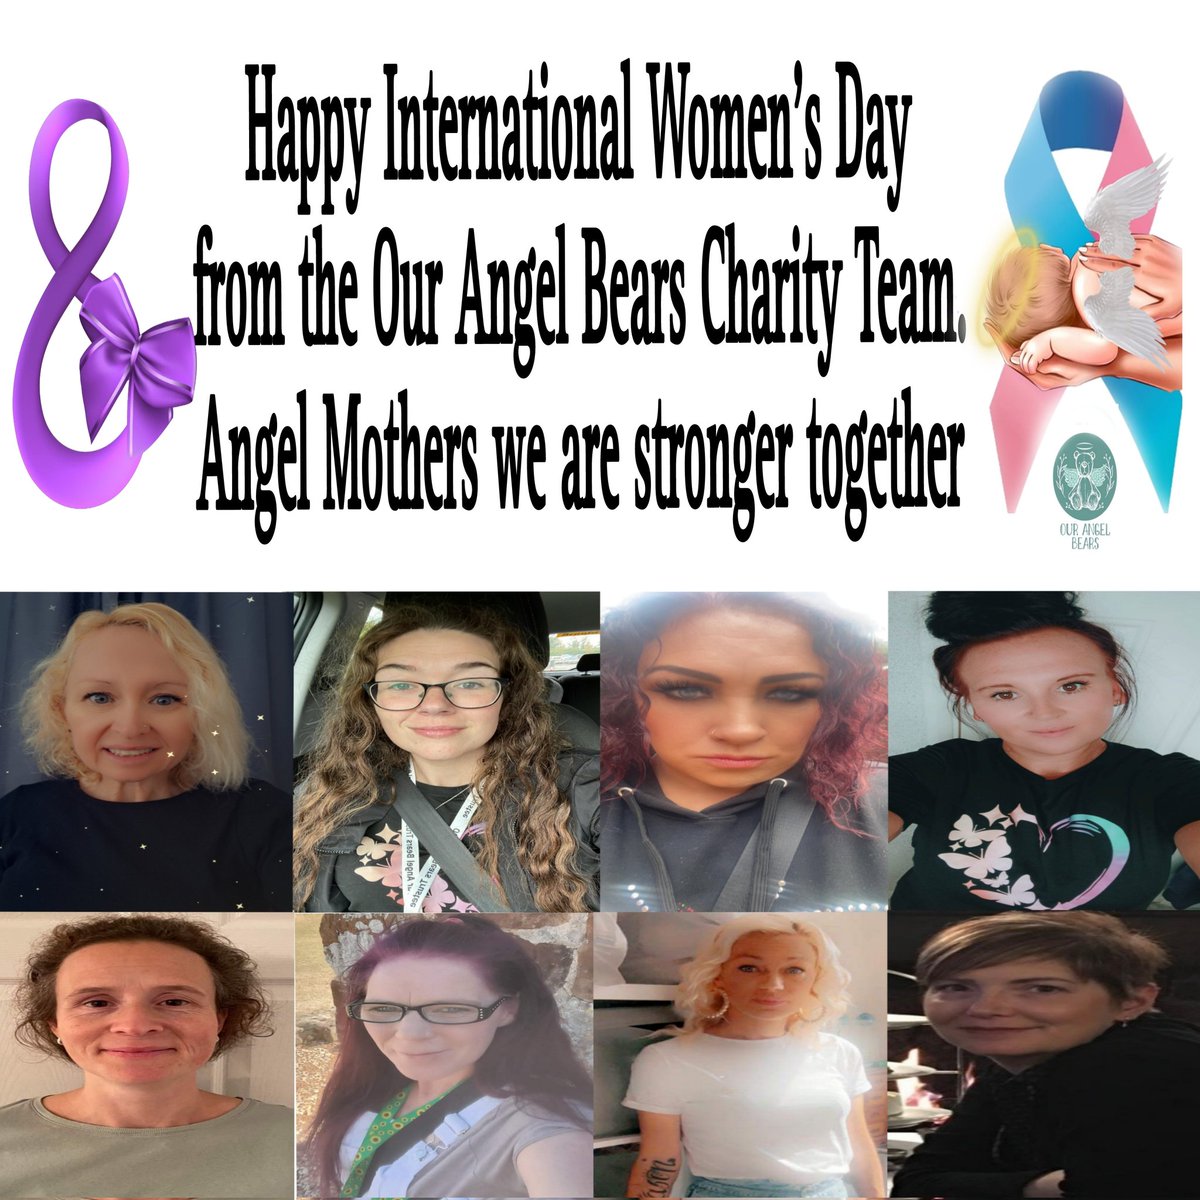 #InternationalWomensDay #Women'sDay 
#babylosscommunity #StrongerTogether